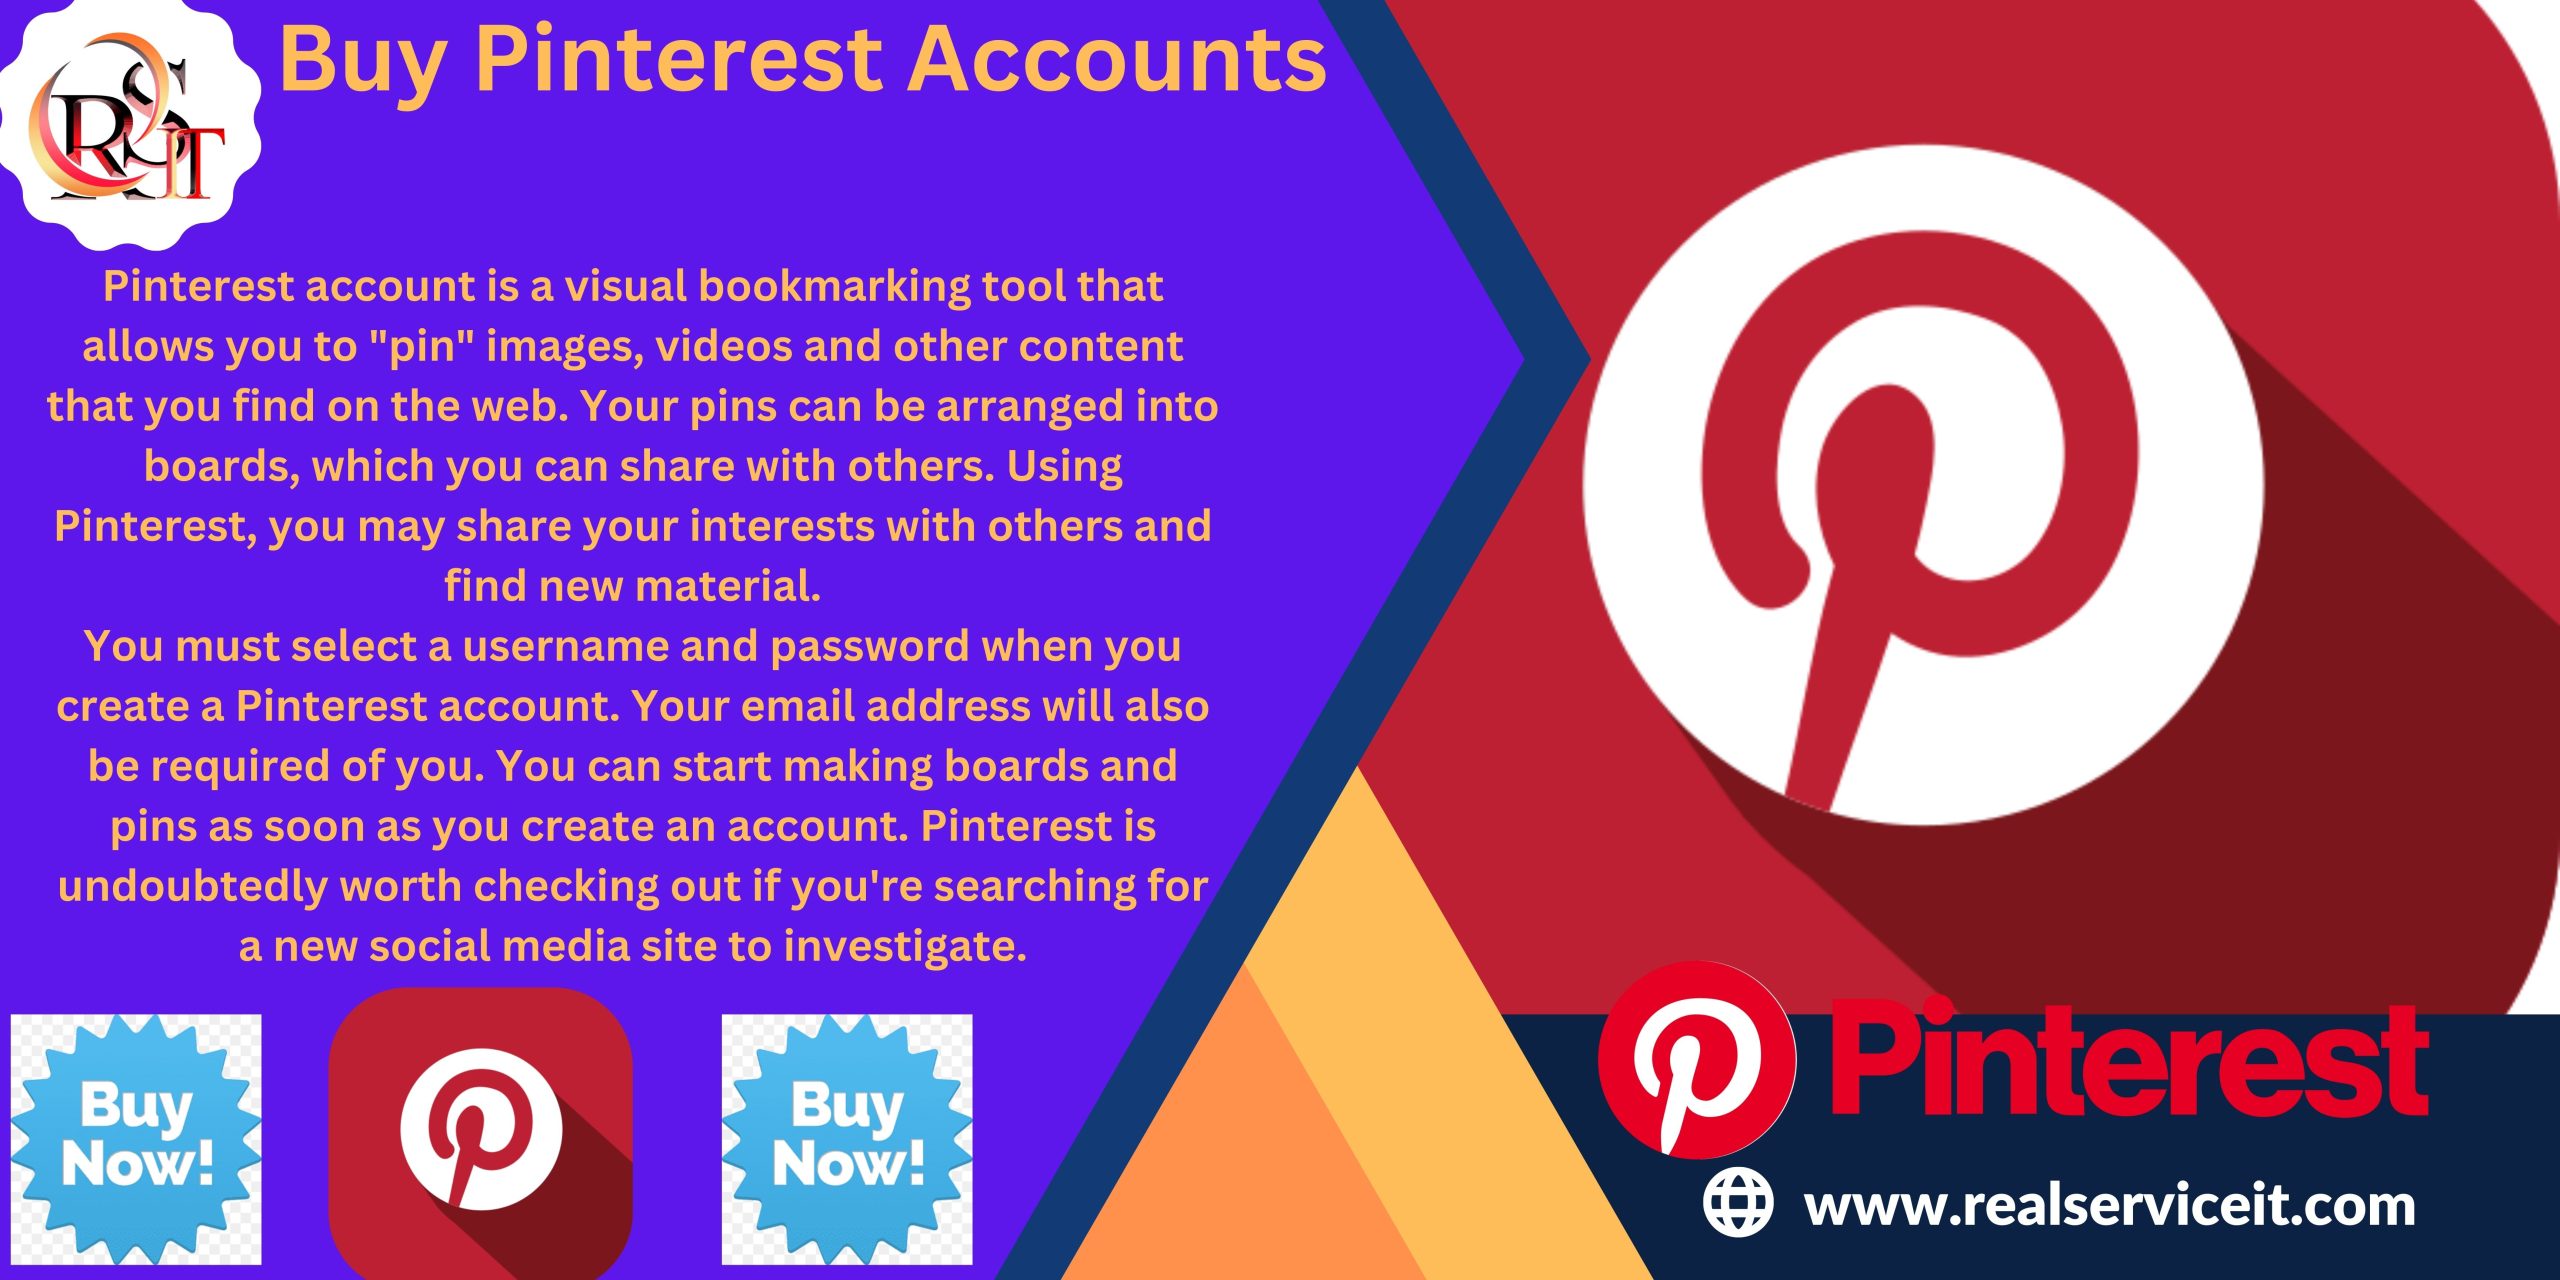 Buy Pinterest Accounts